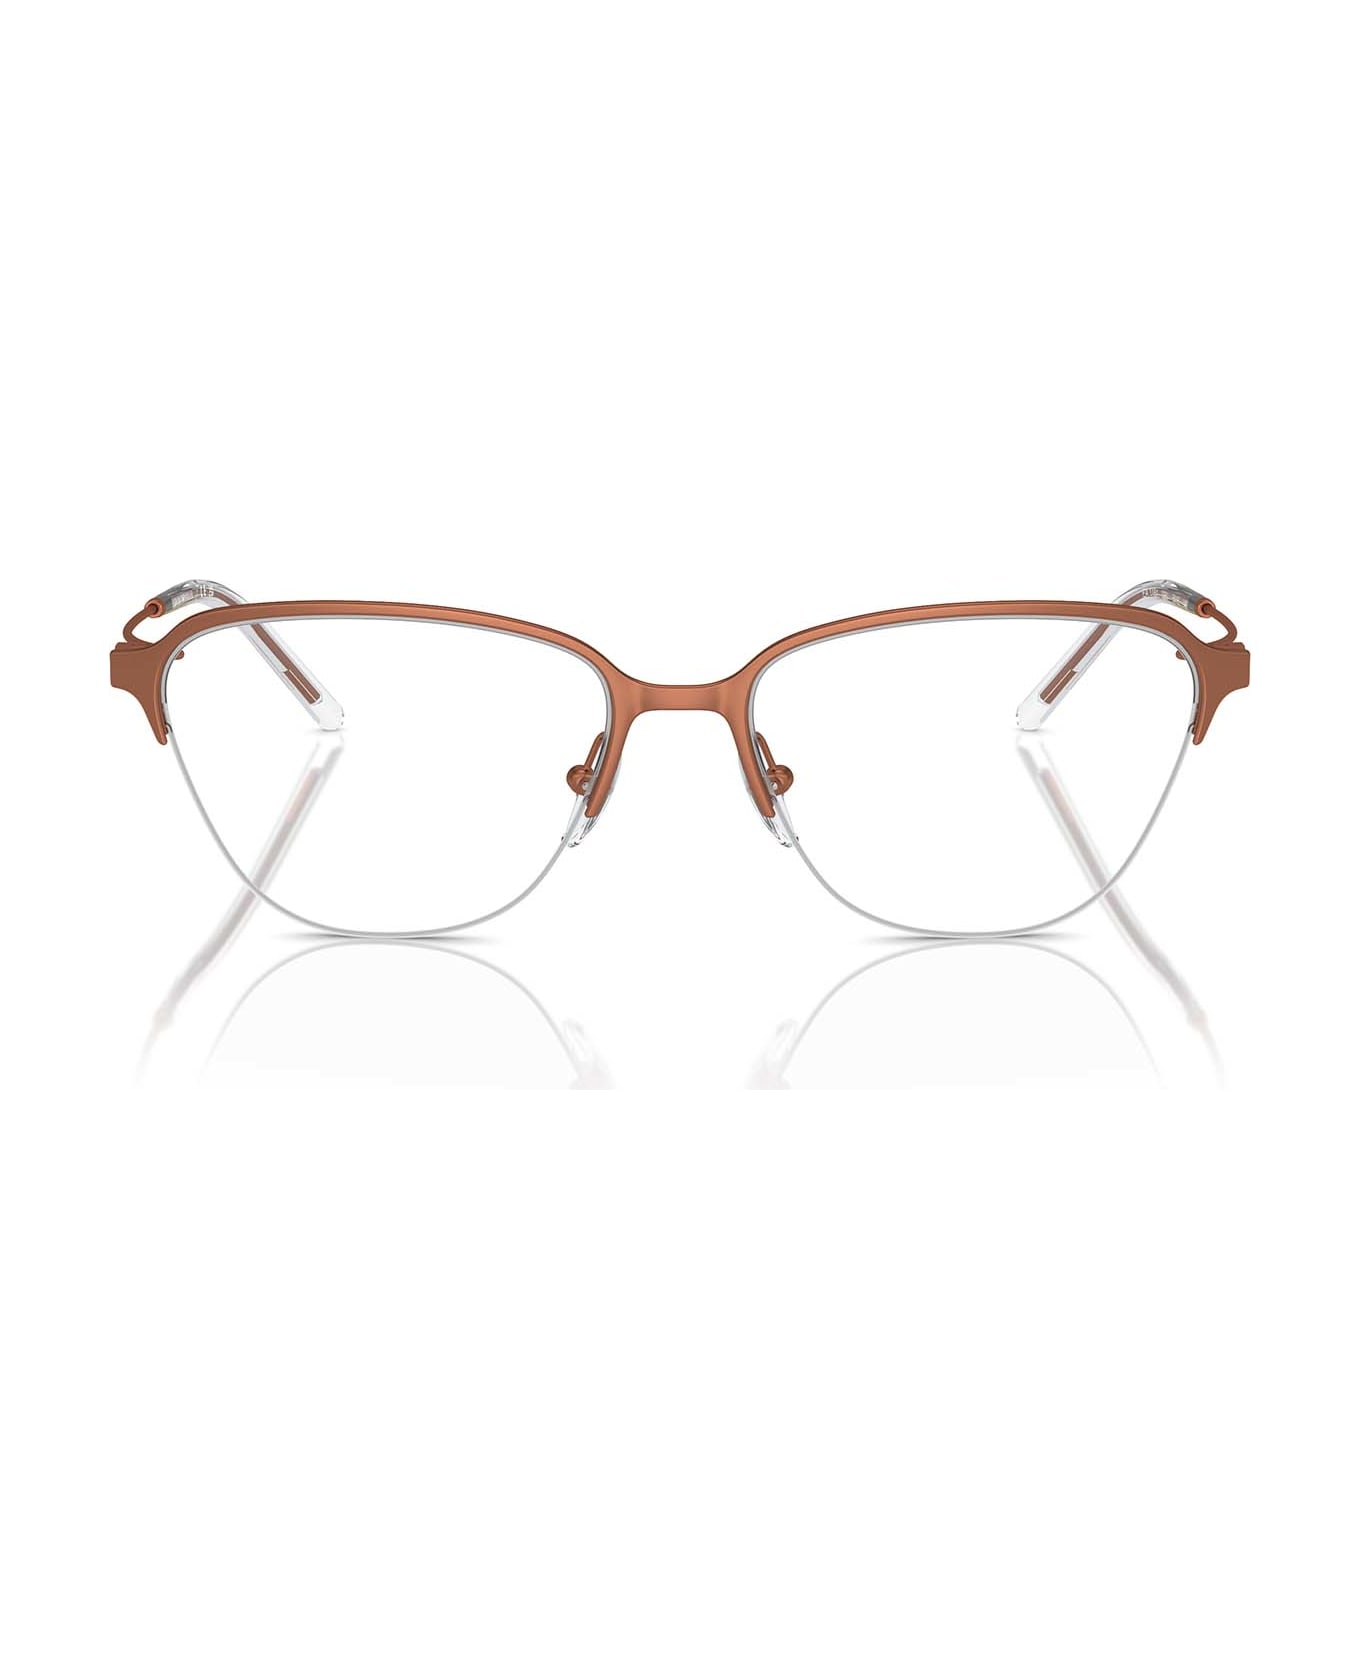 Emporio Armani Ea1161 Shiny Brown Glasses - Shiny Brown アイウェア